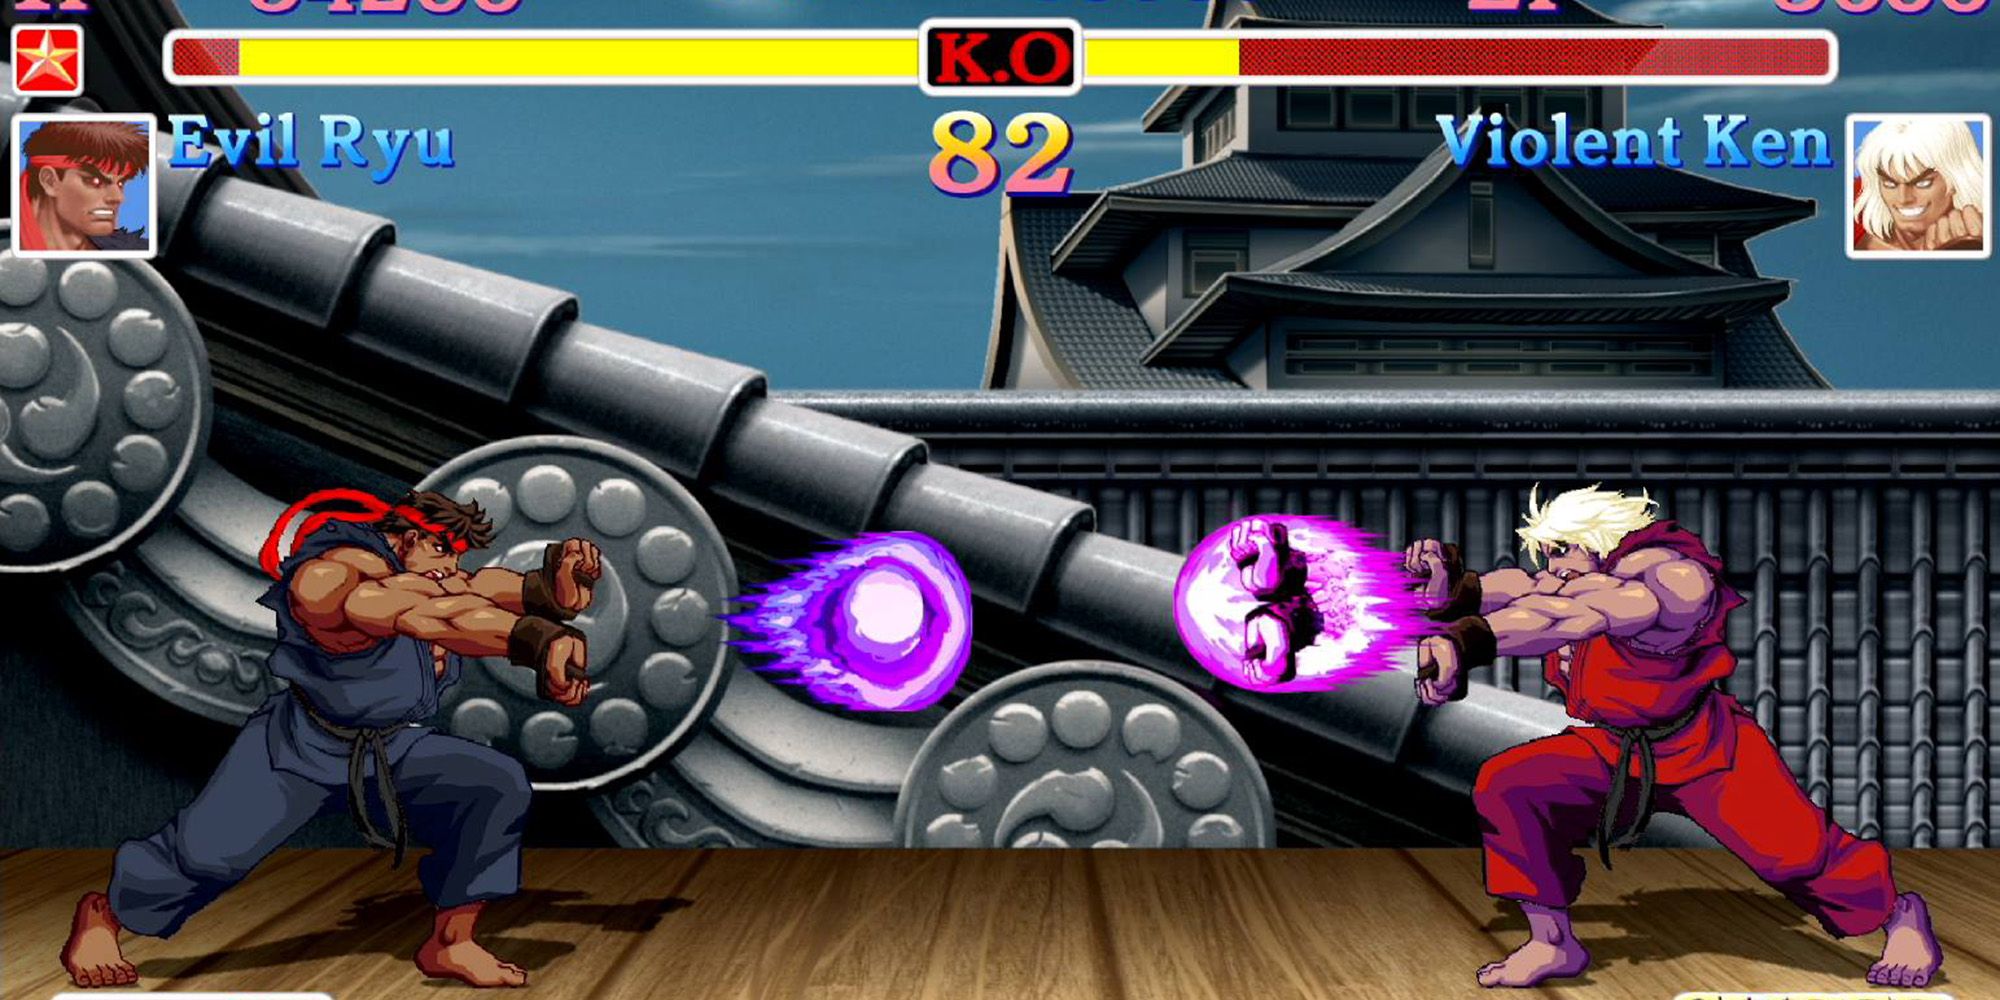 Ultra Street Fighter 2 Evil Ryu vs Violent Ken